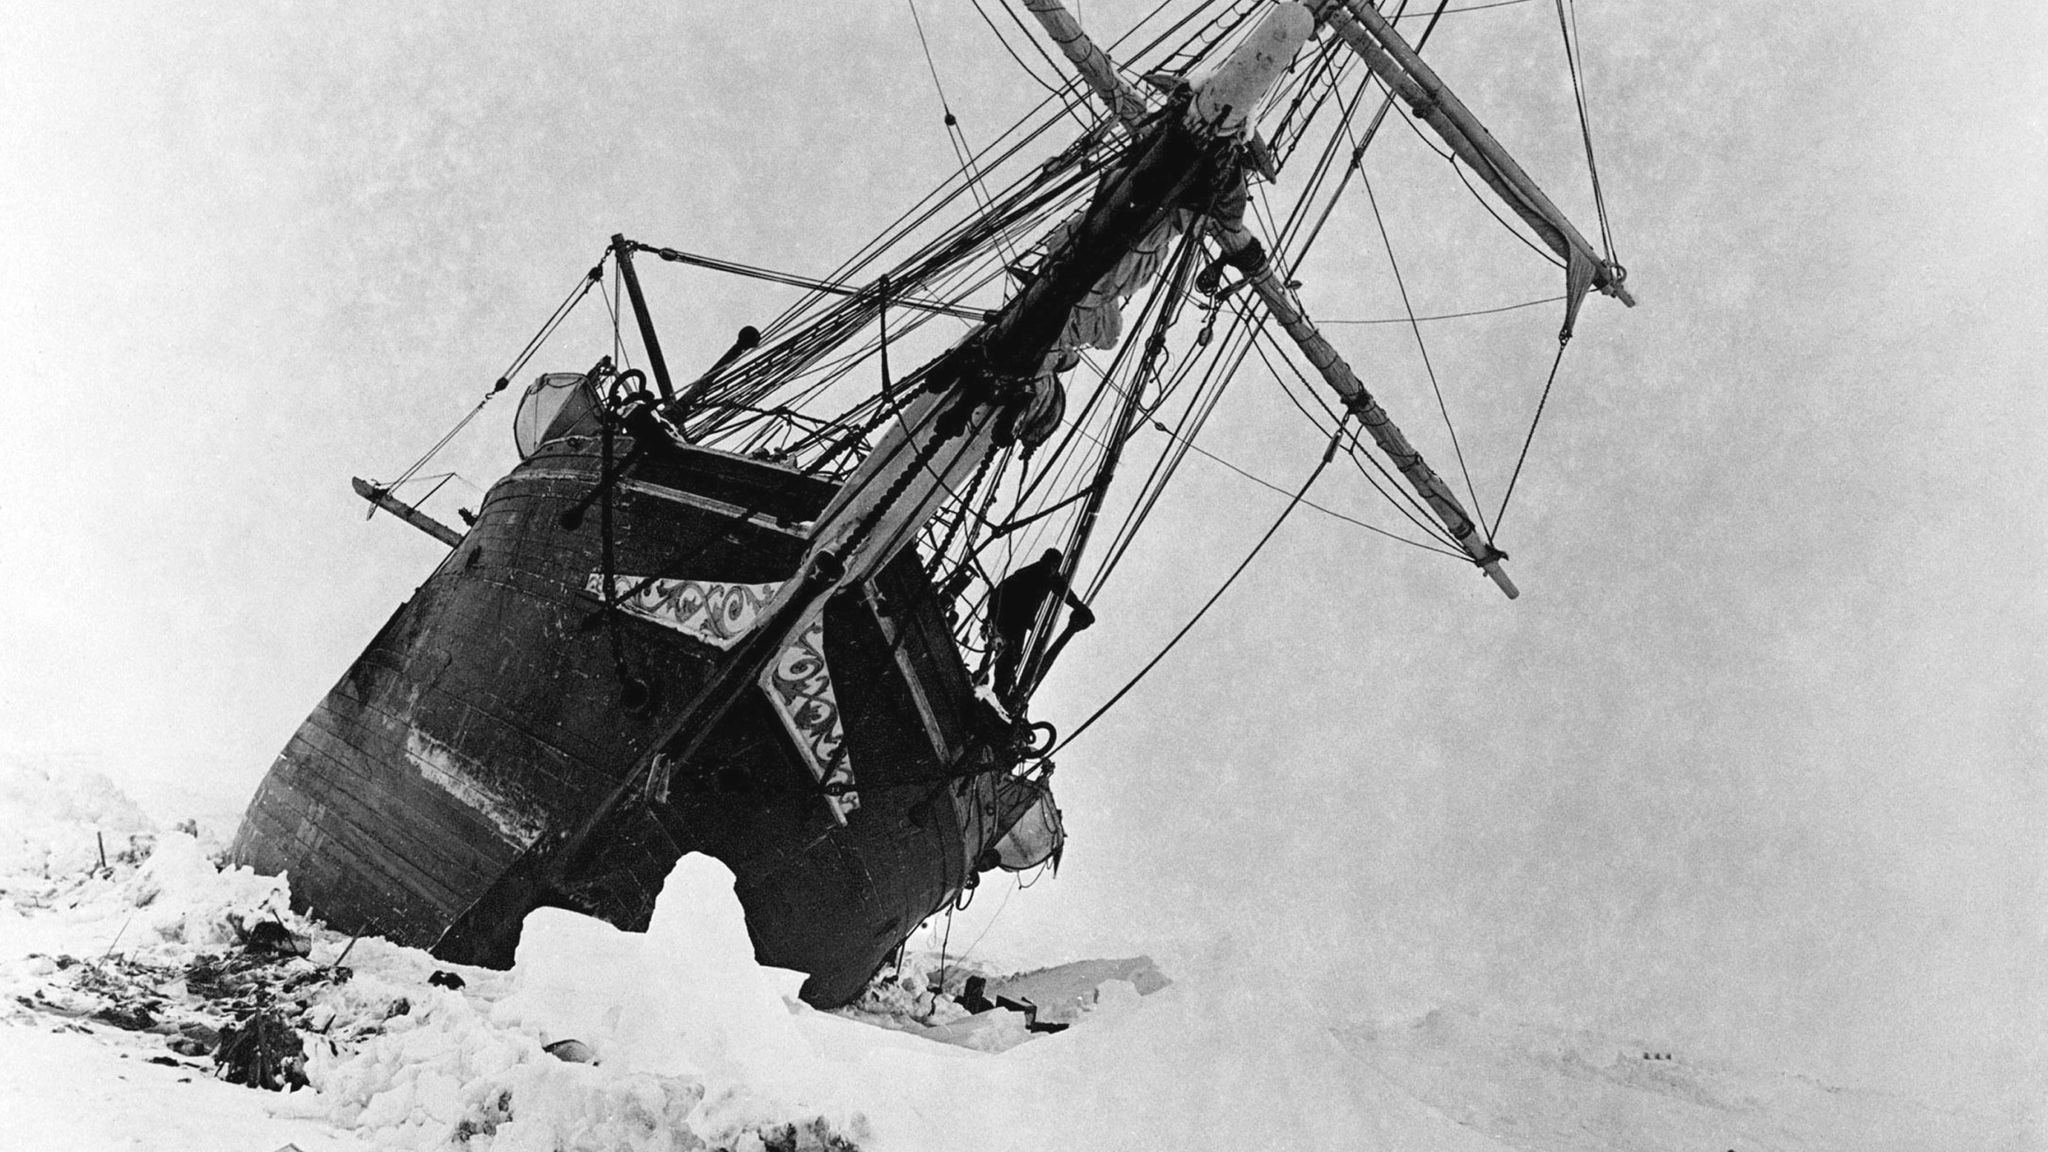 Shackleton S Lost Ship Endurance Found Off Antarctica New Images Capture Astonishing